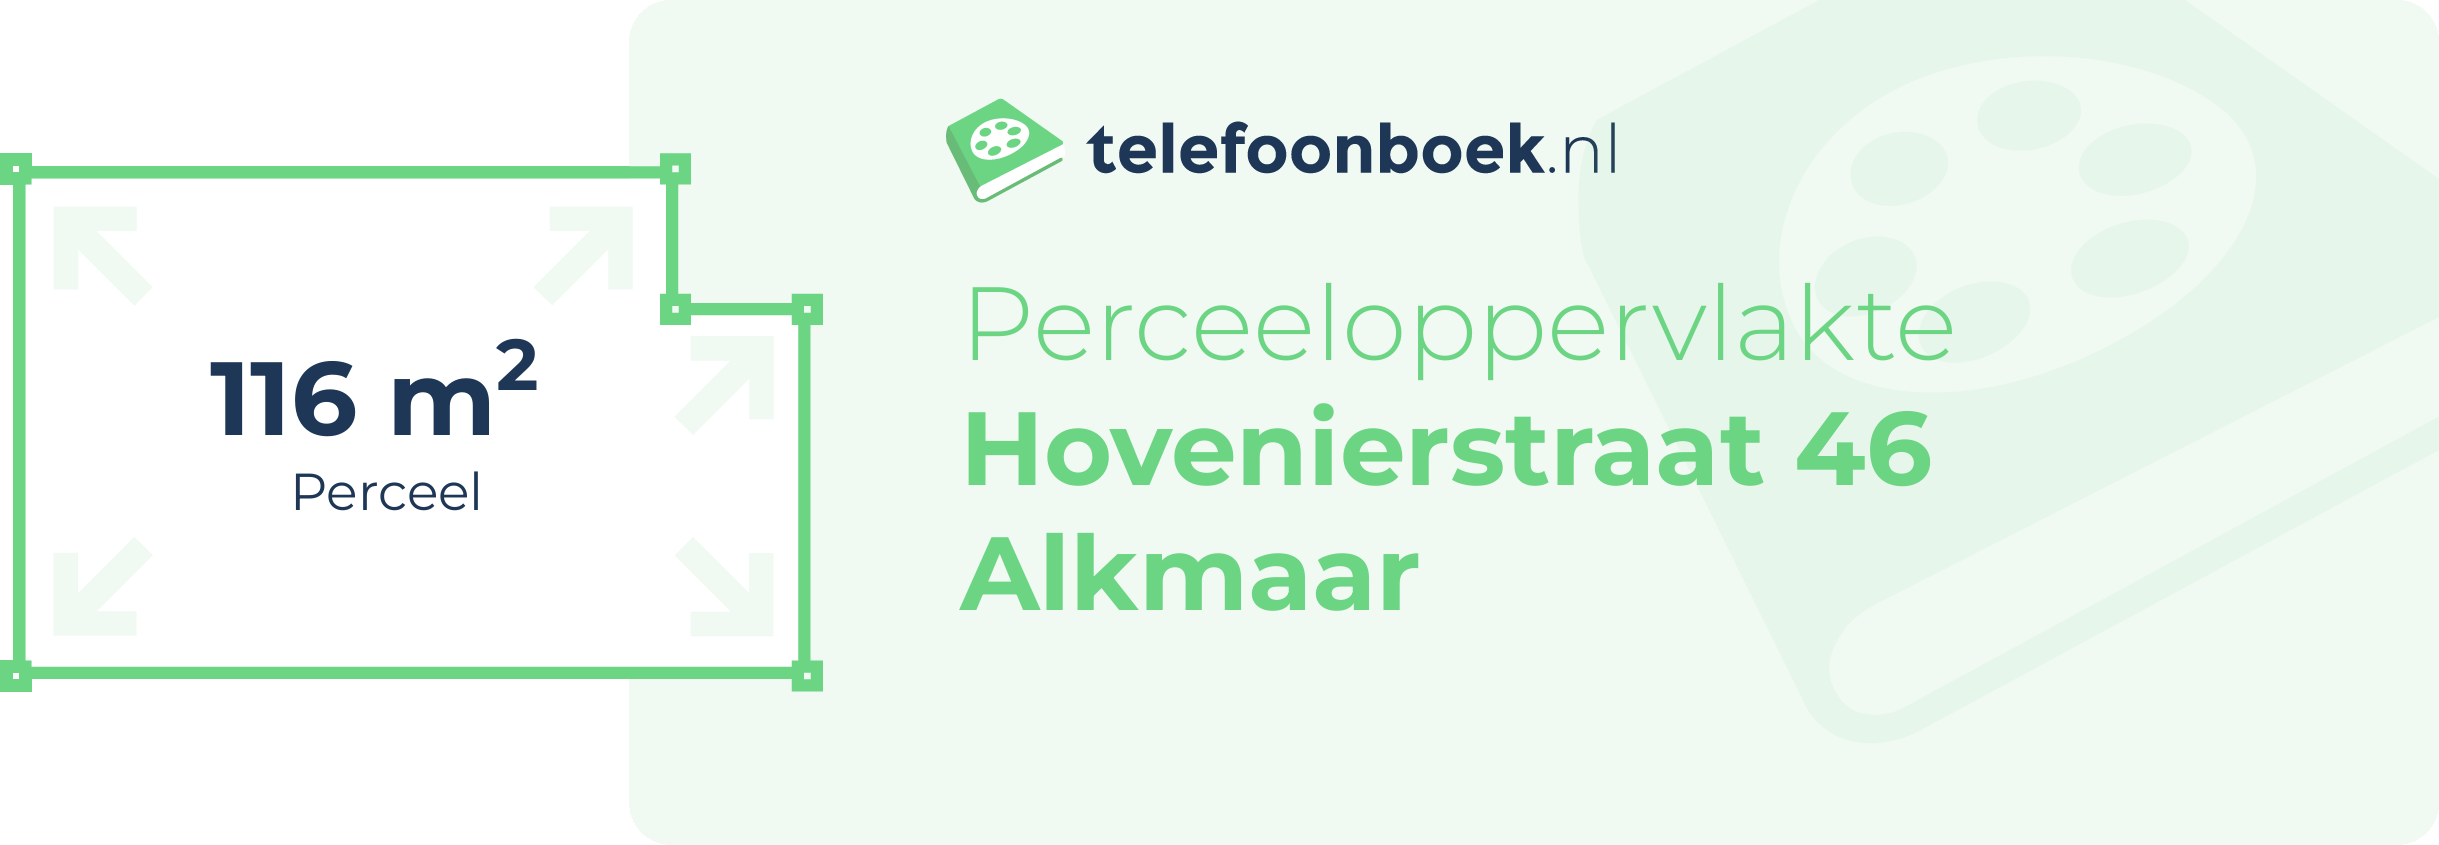 Perceeloppervlakte Hovenierstraat 46 Alkmaar